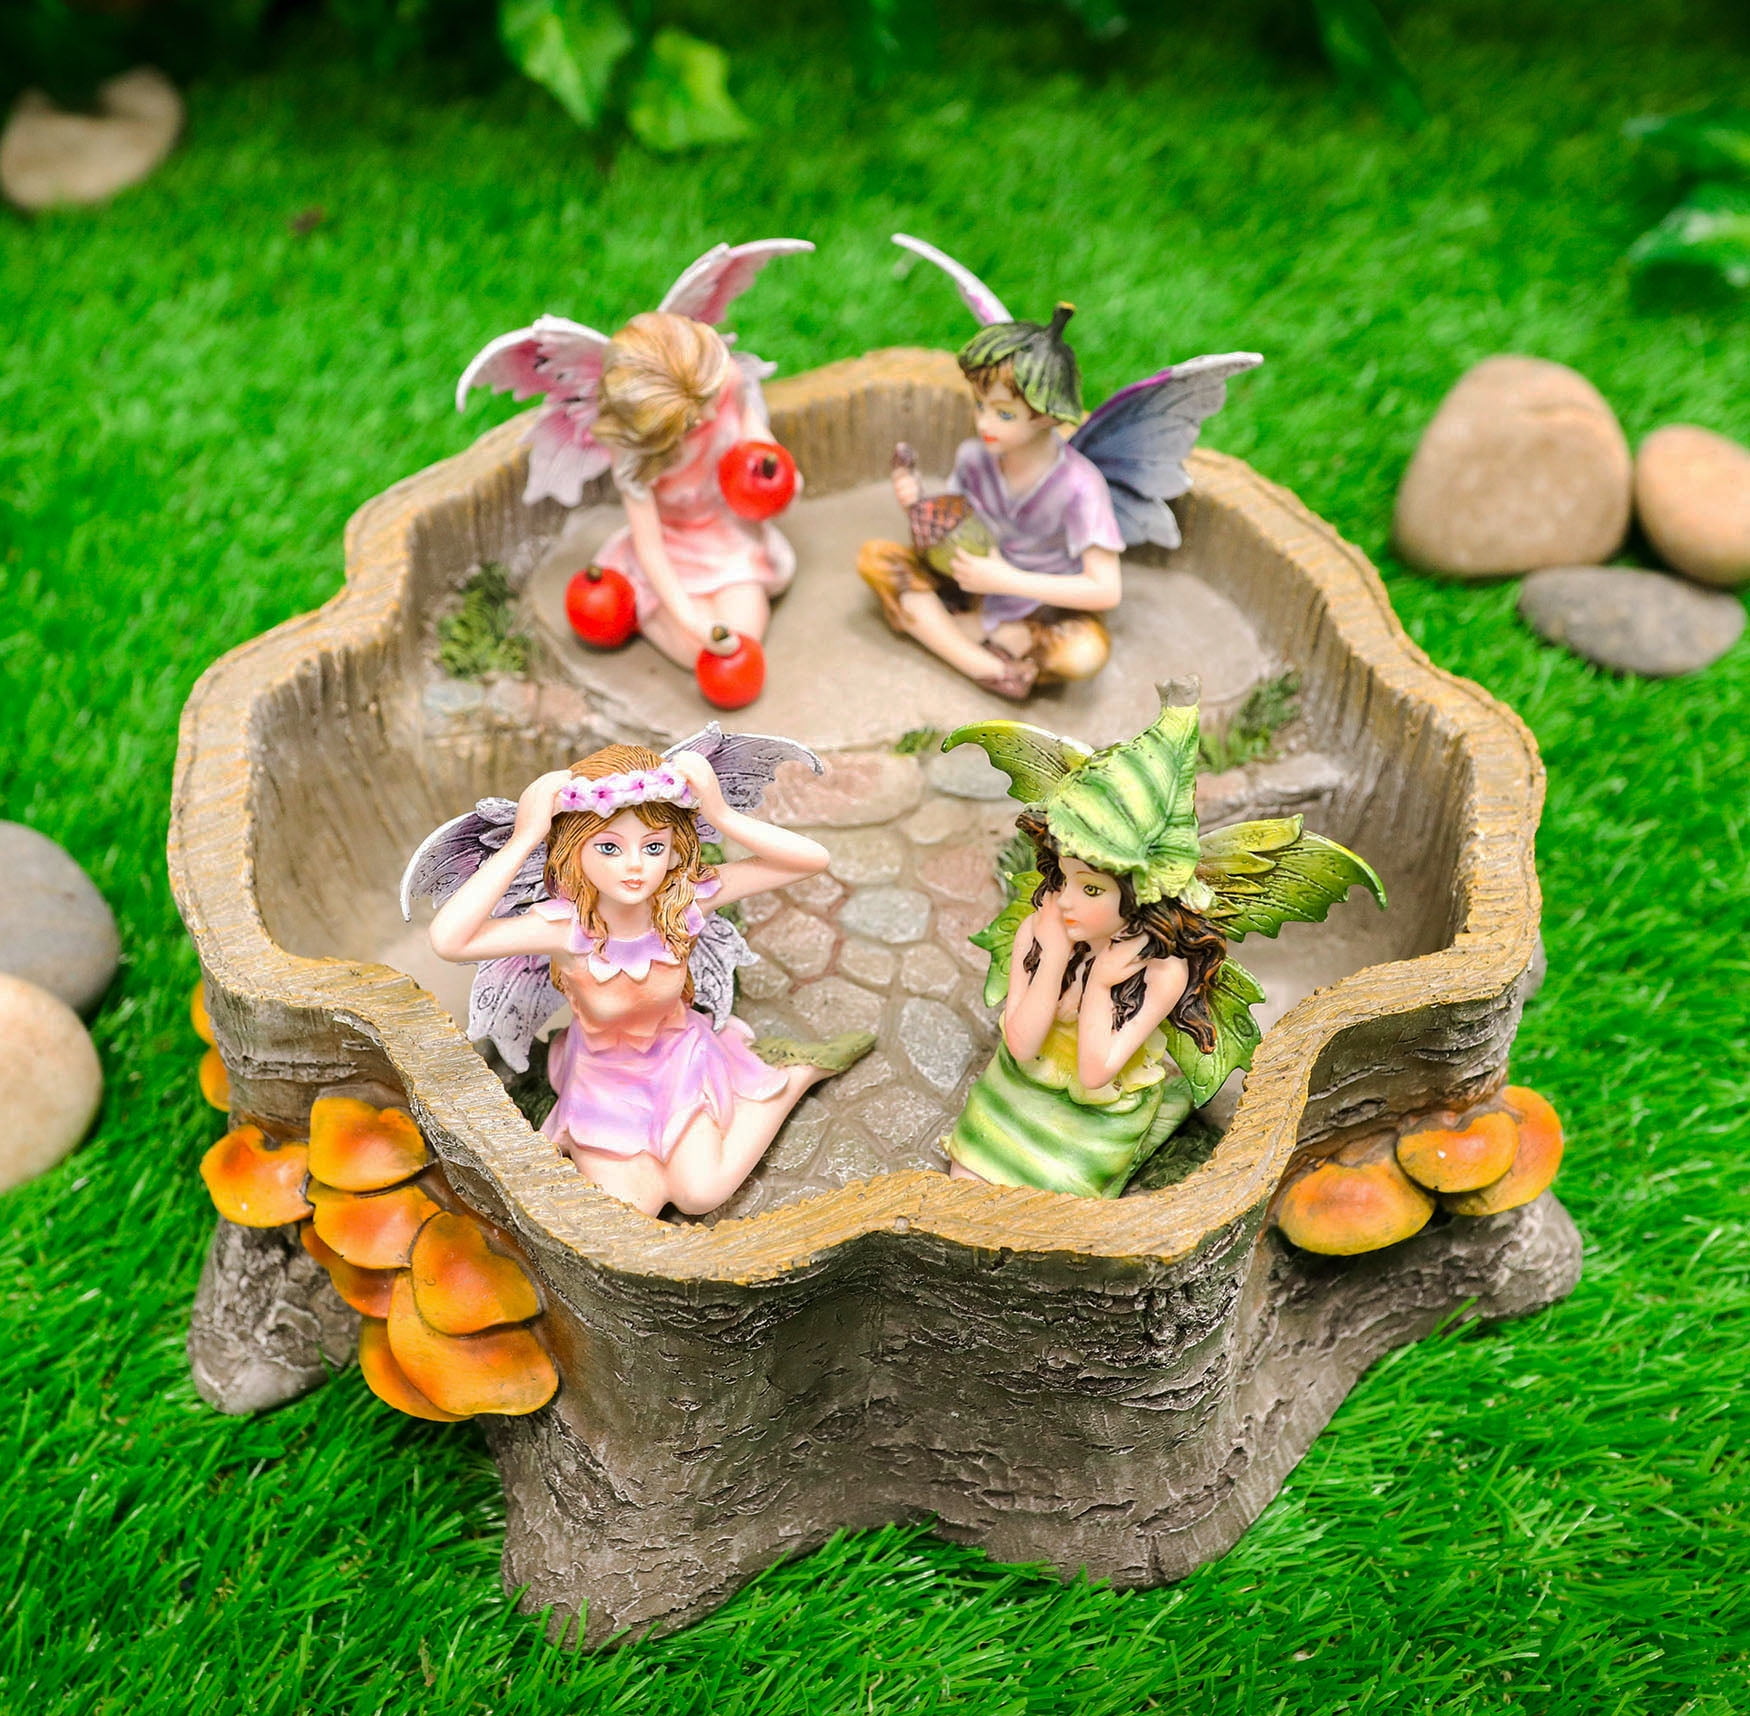 Darice Fairy Garden Animals: Resin Mini Pigs, 3 pack